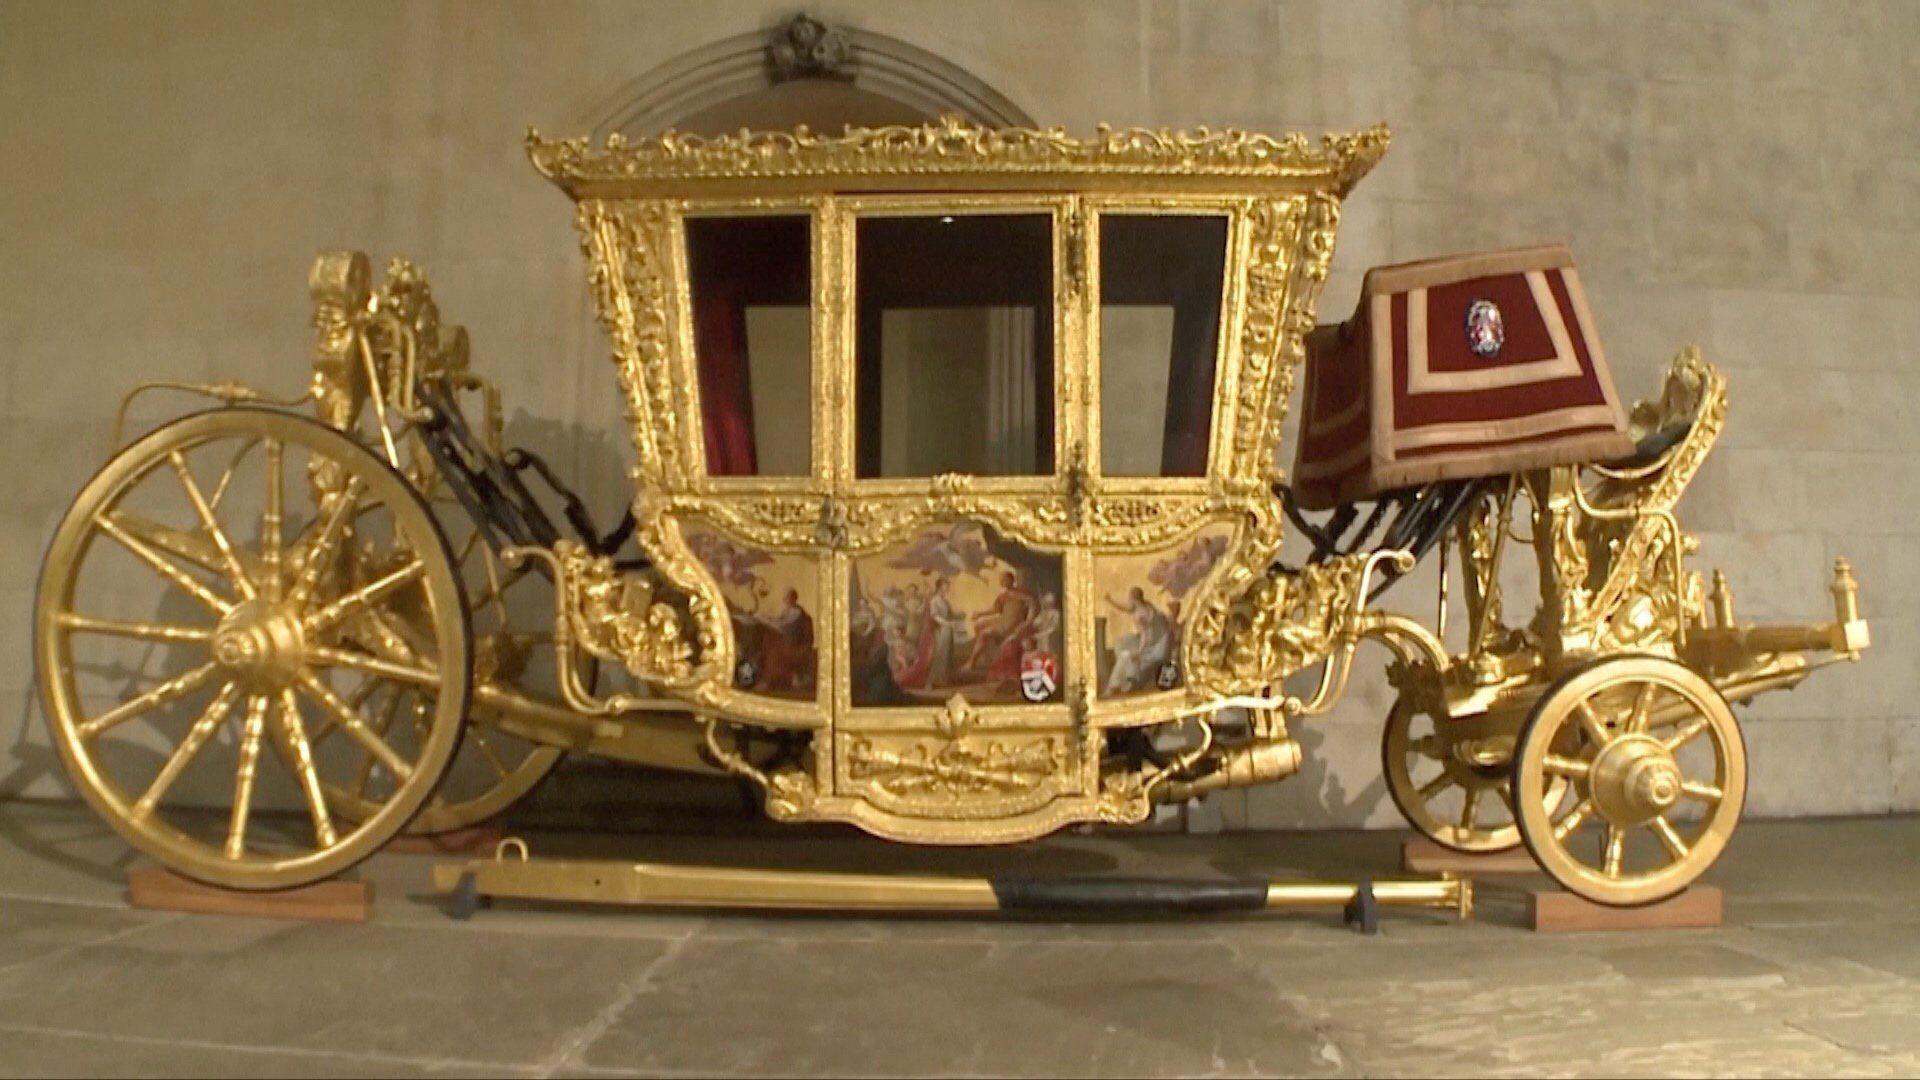 A historic golden chariot awaits King Charles' coronation